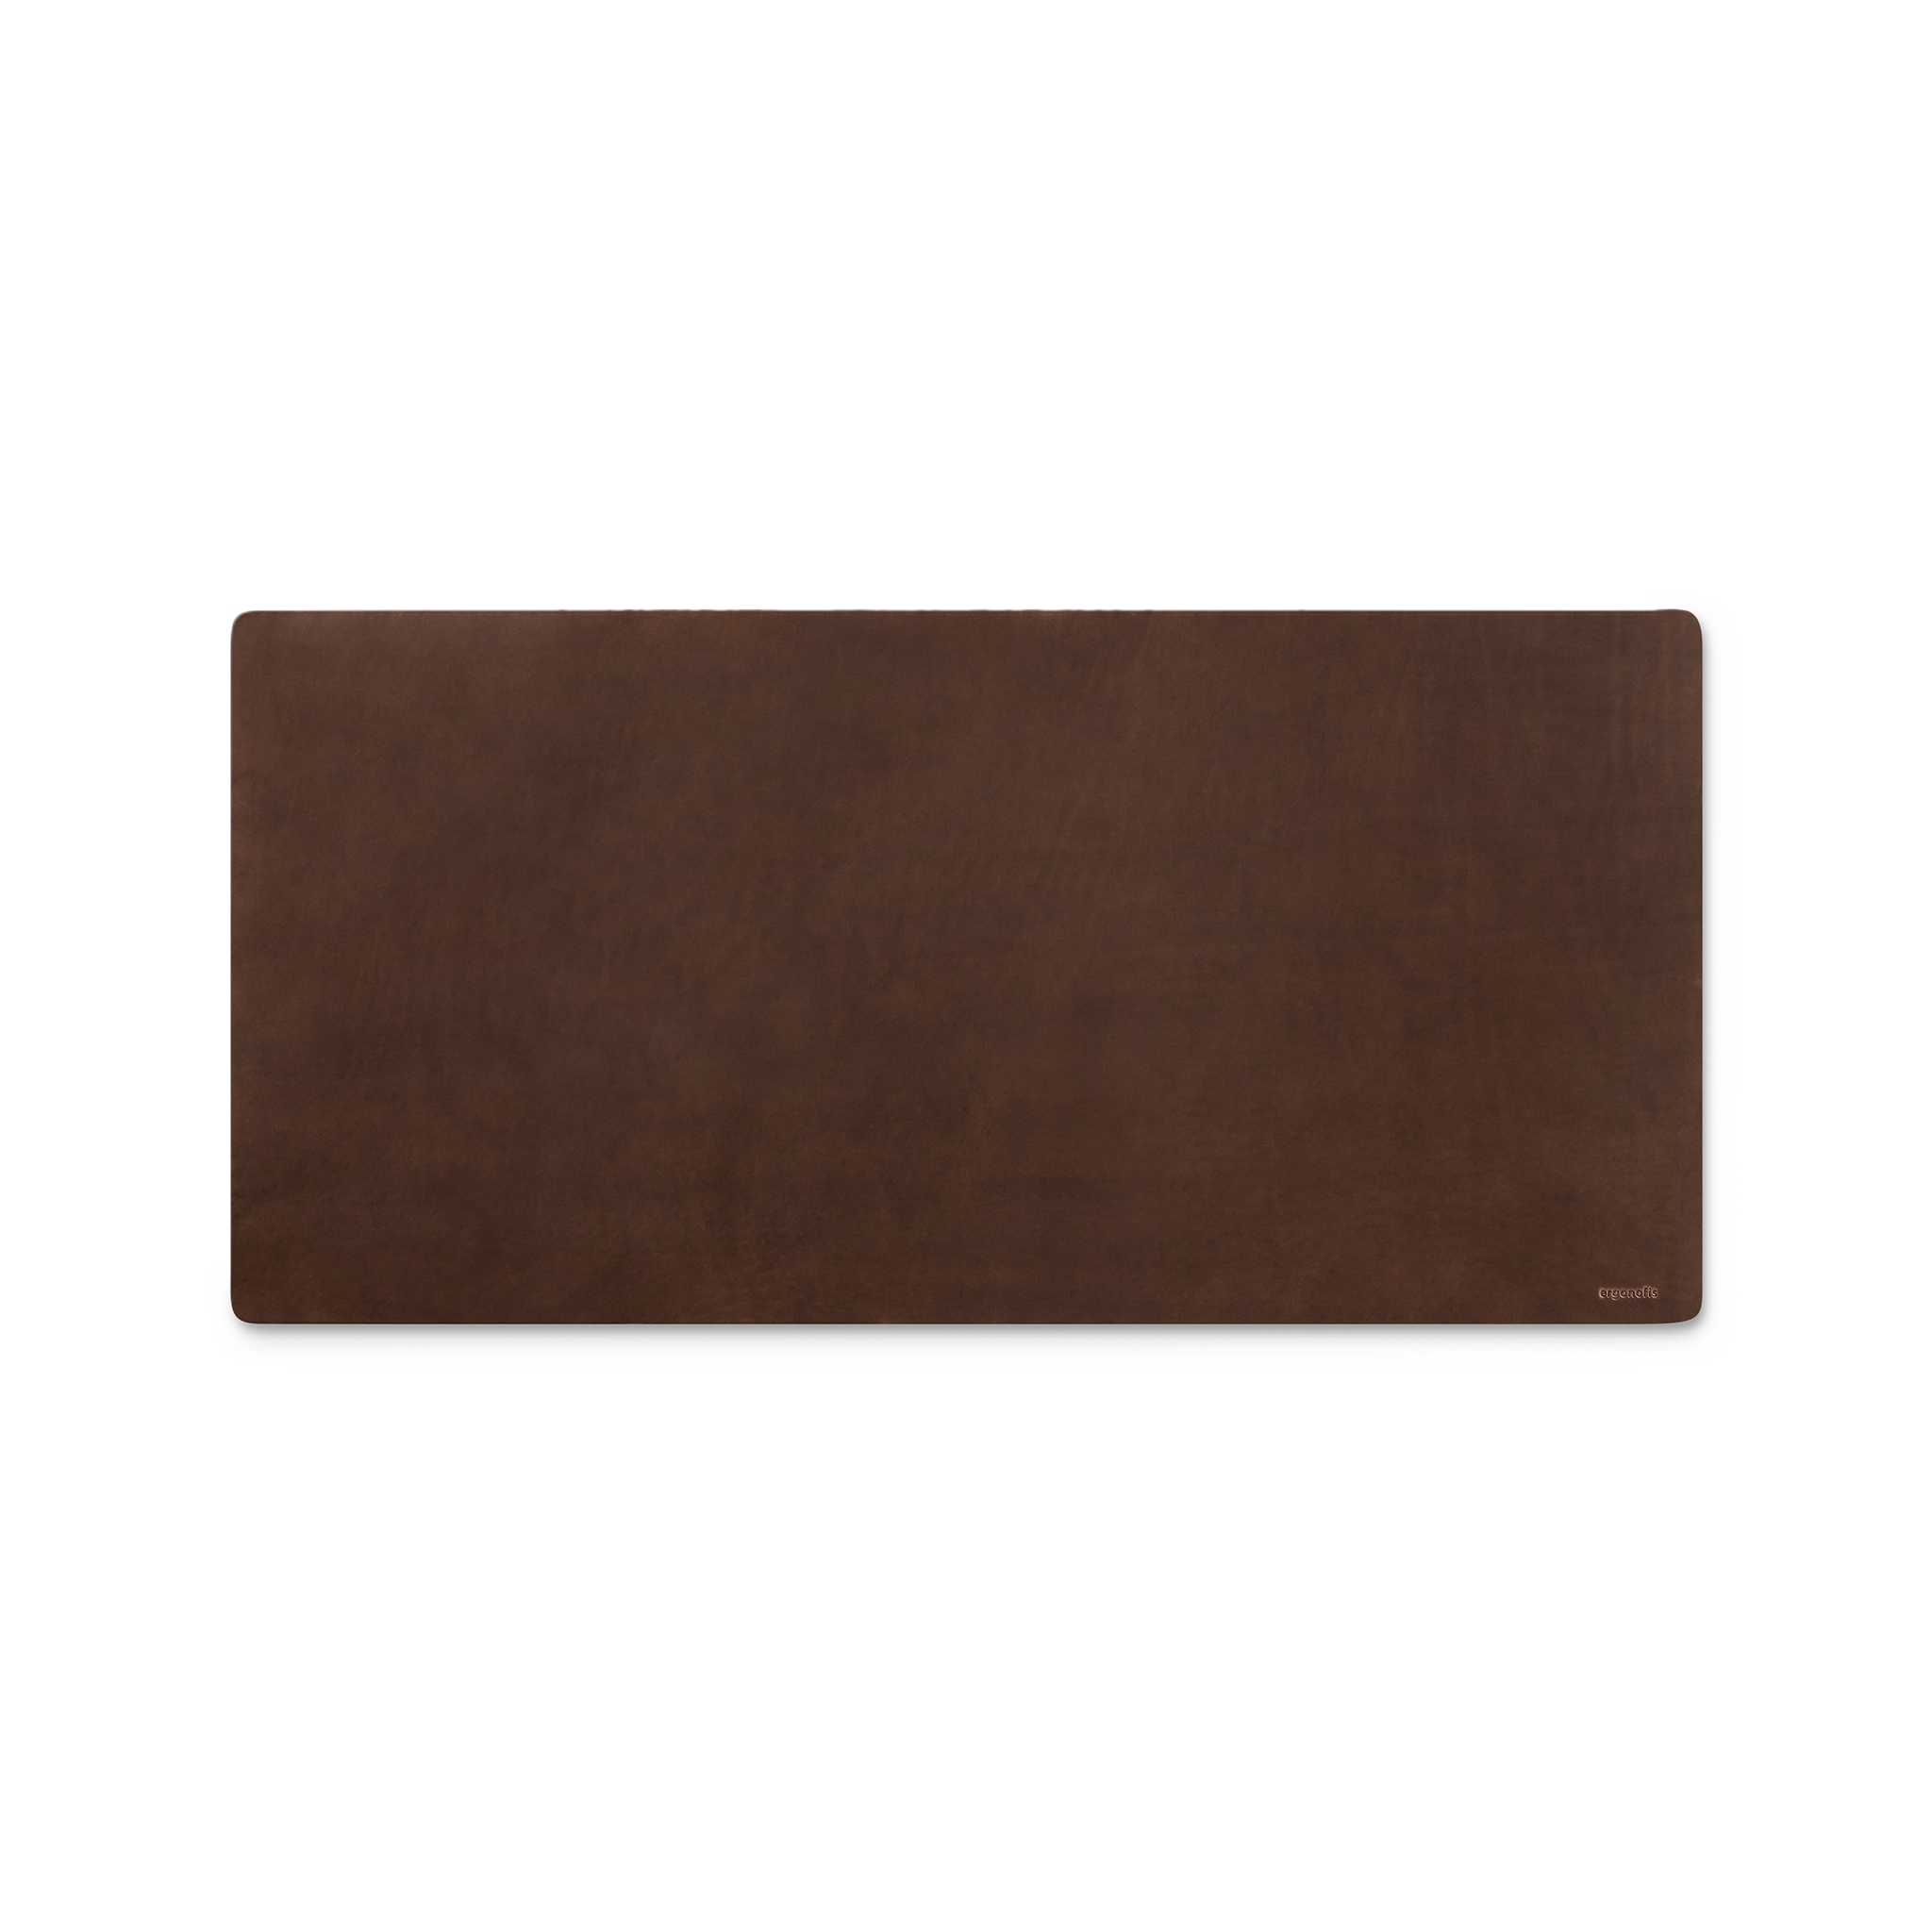 Almost Perfect Leather desk pad - Hazelnut - Brun